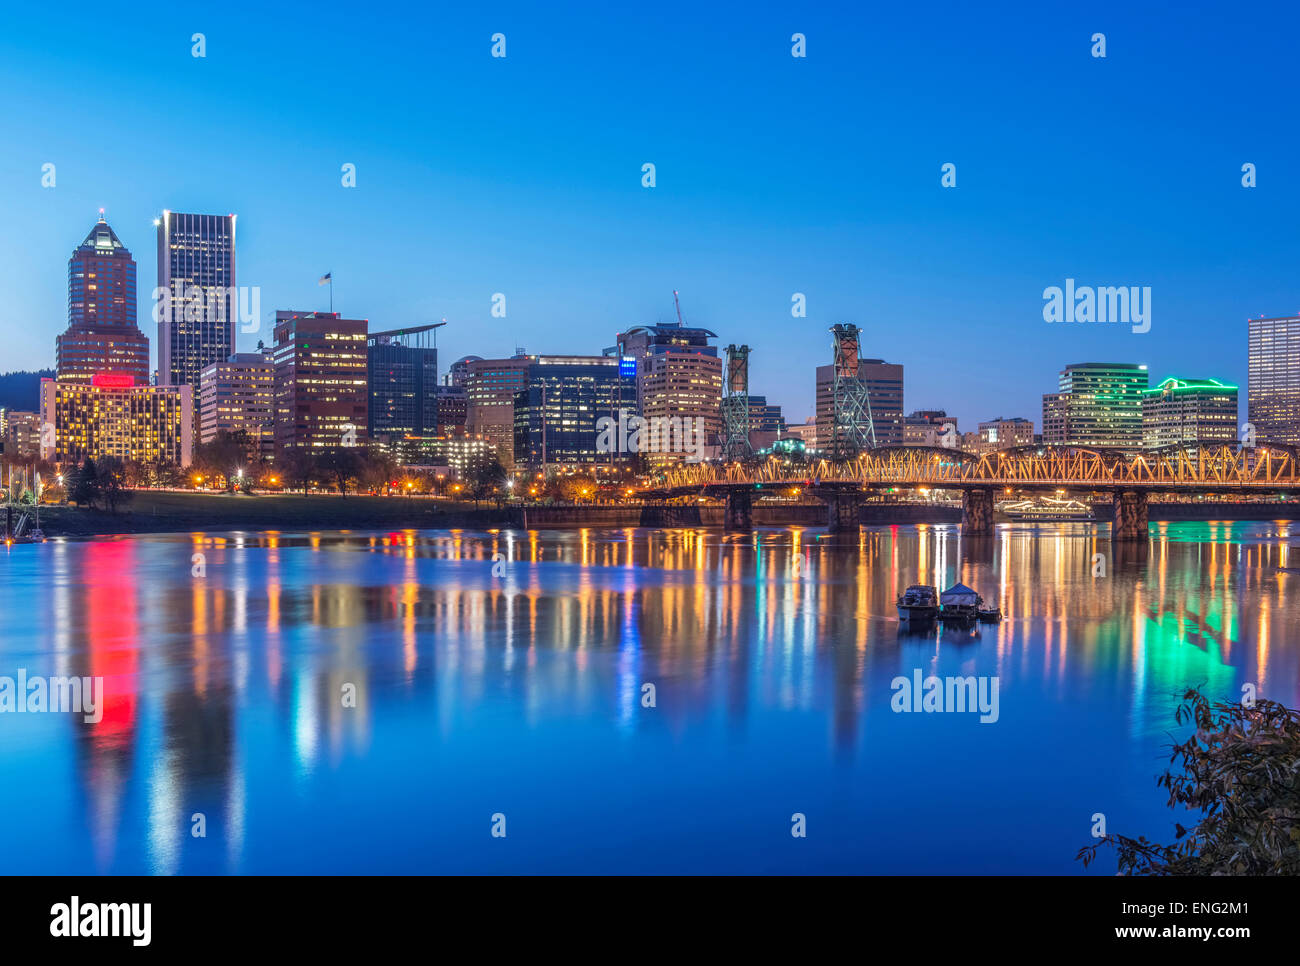 Illuminated buildings in Portland city skyline, Oregon, United States Stock Photo